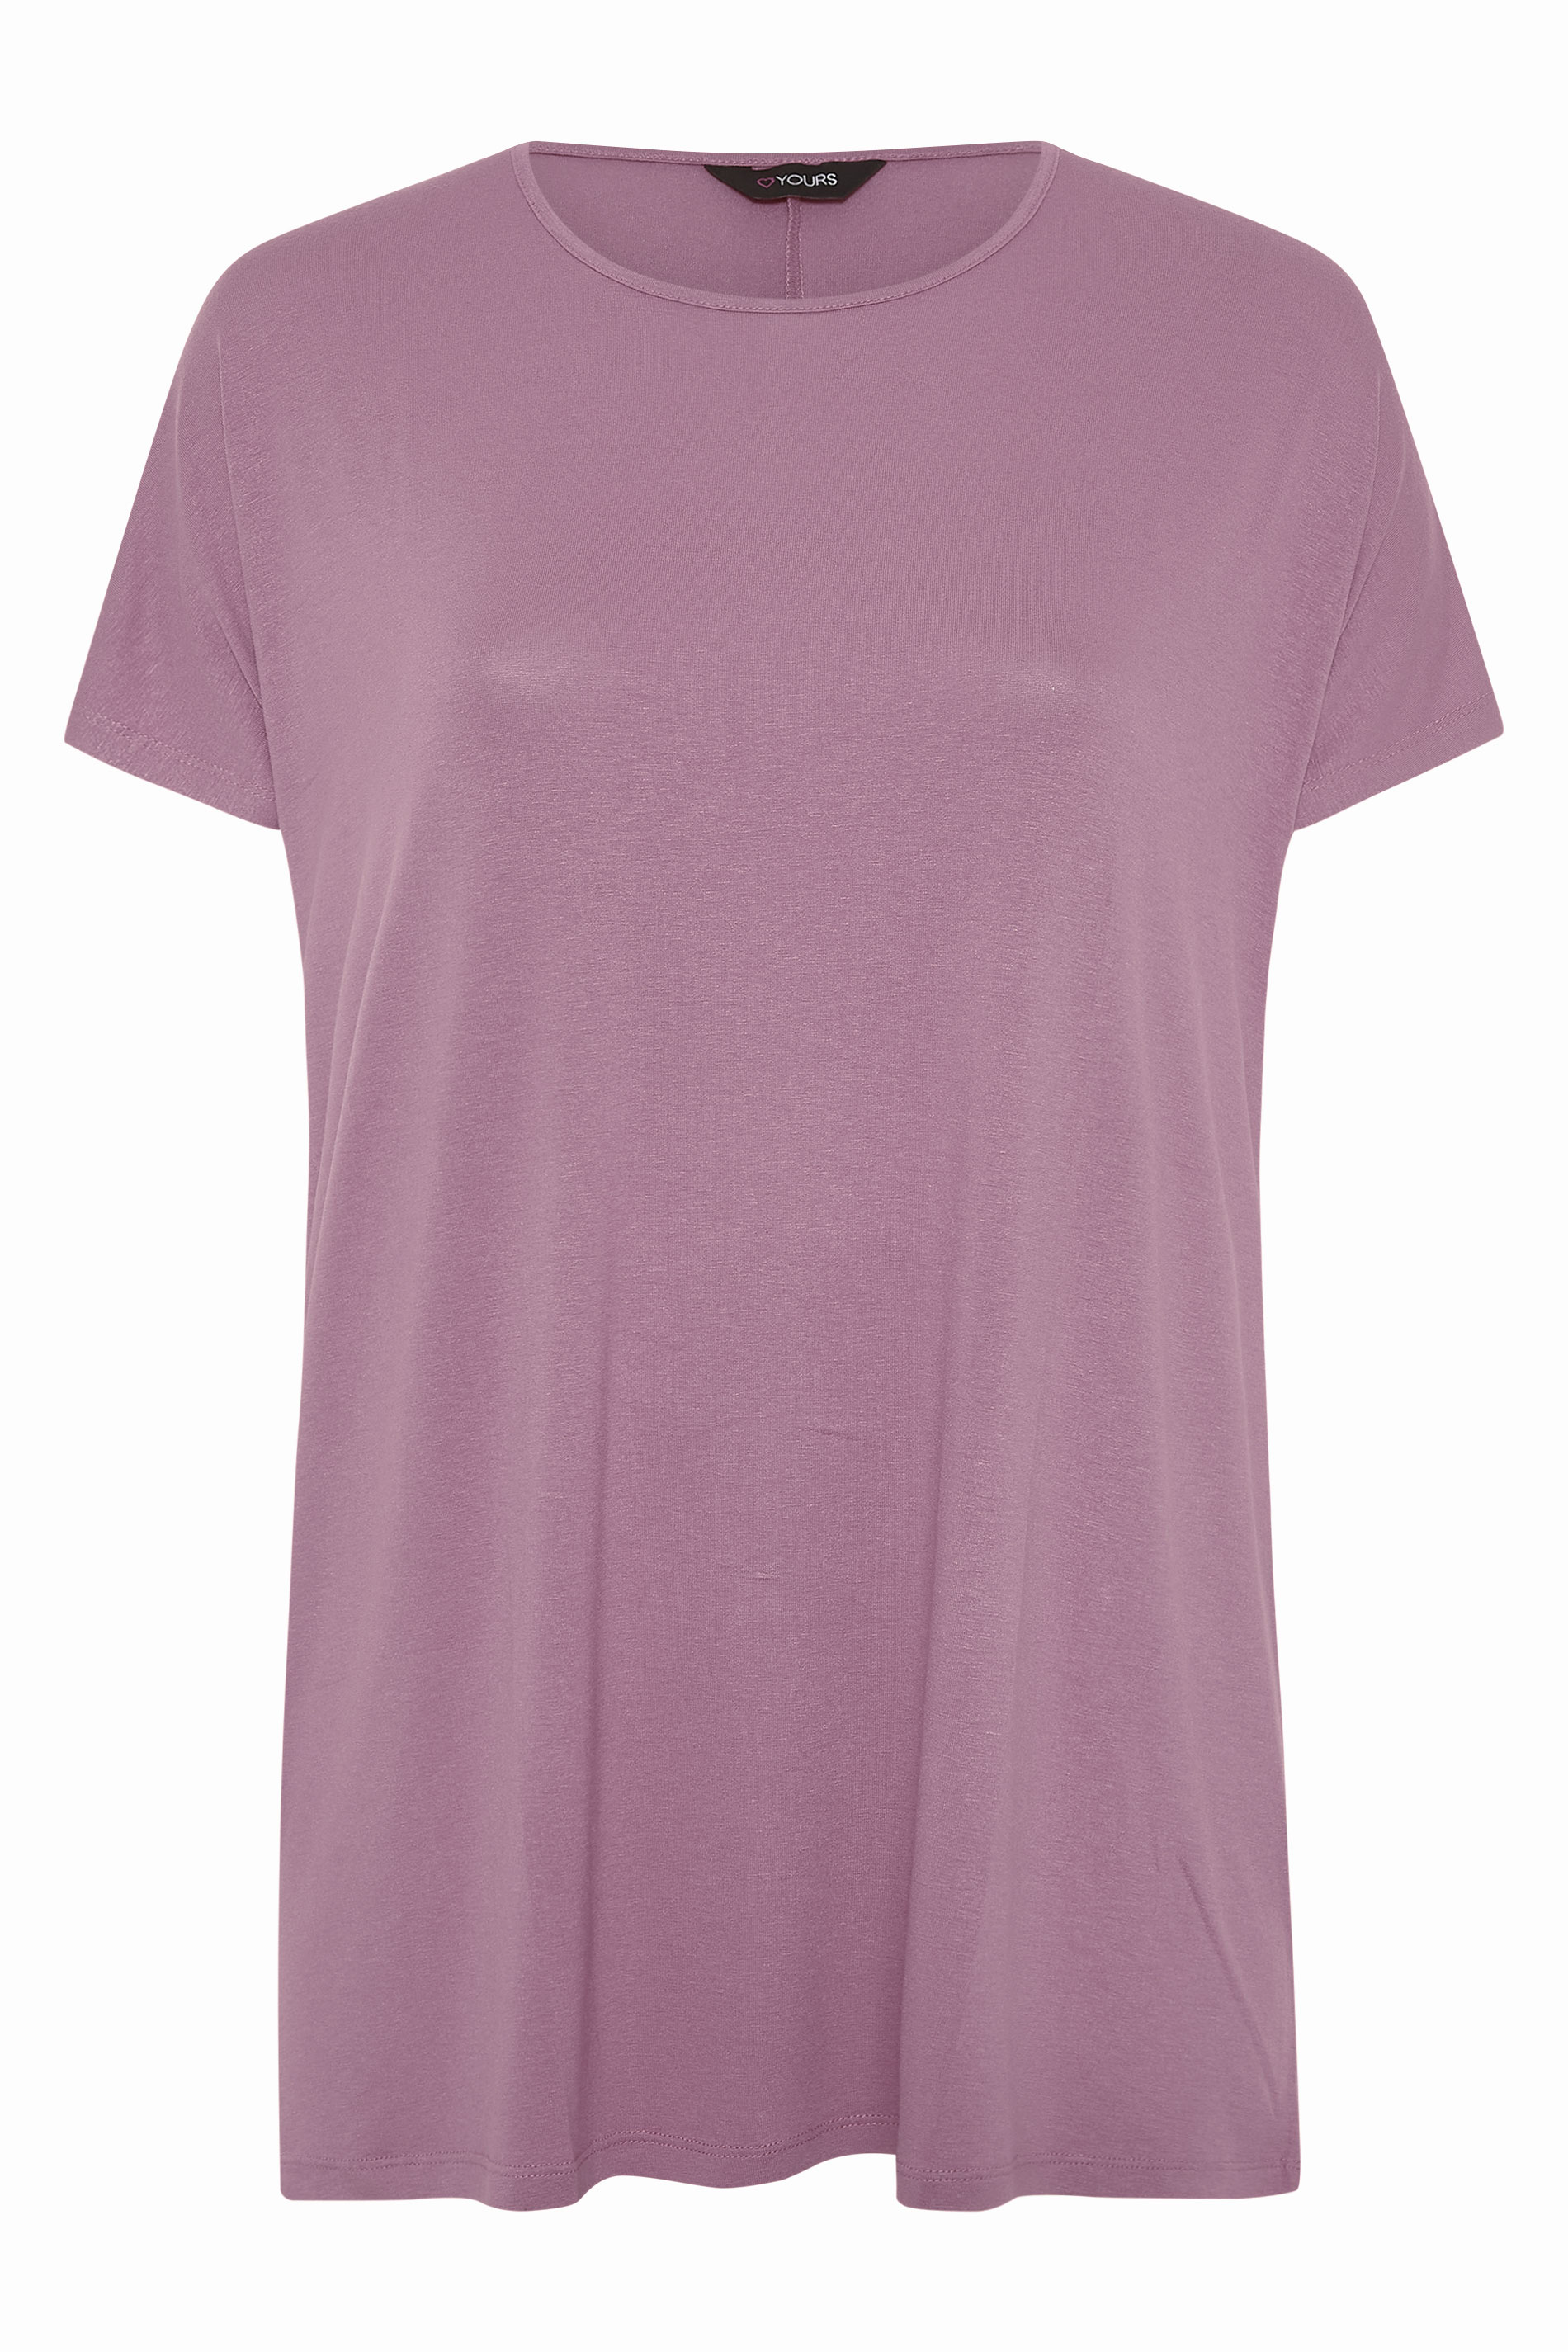 Plus Size Mauve Dipped Hem Short Sleeved T-Shirt | Yours Clothing